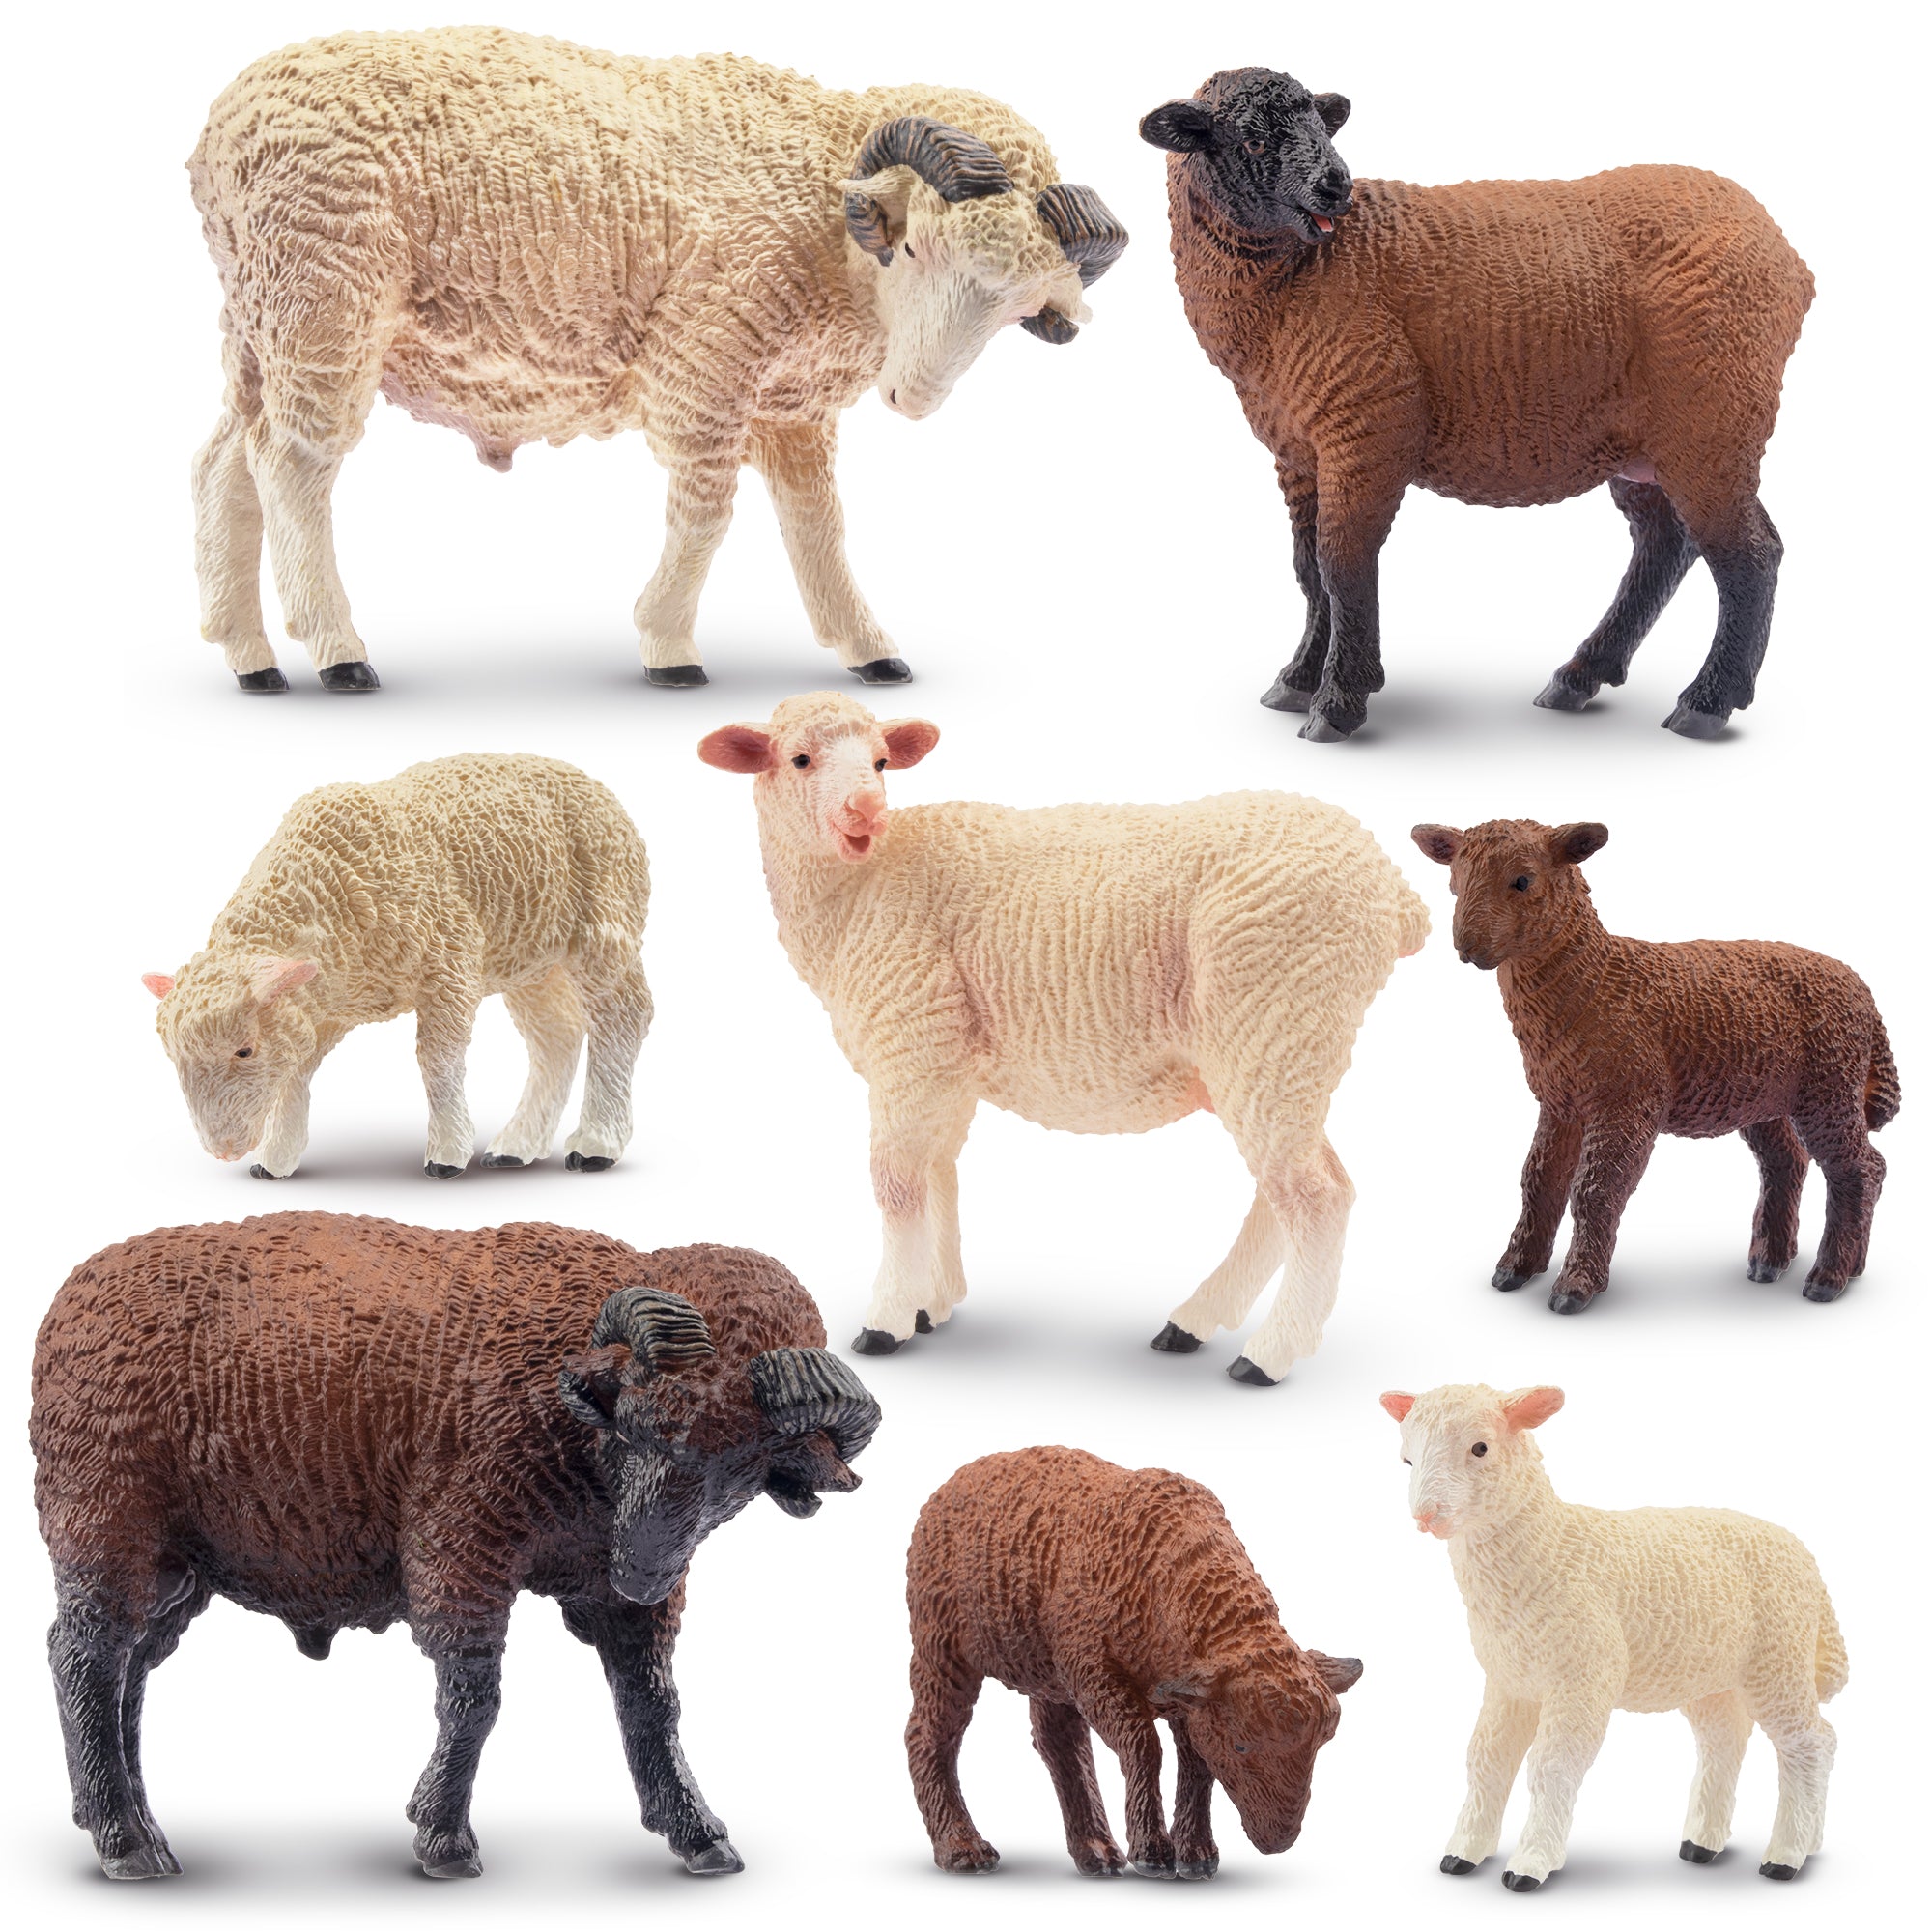 8-Piece Merino Sheep Figurines Playset with Adult & Baby Sheep-2